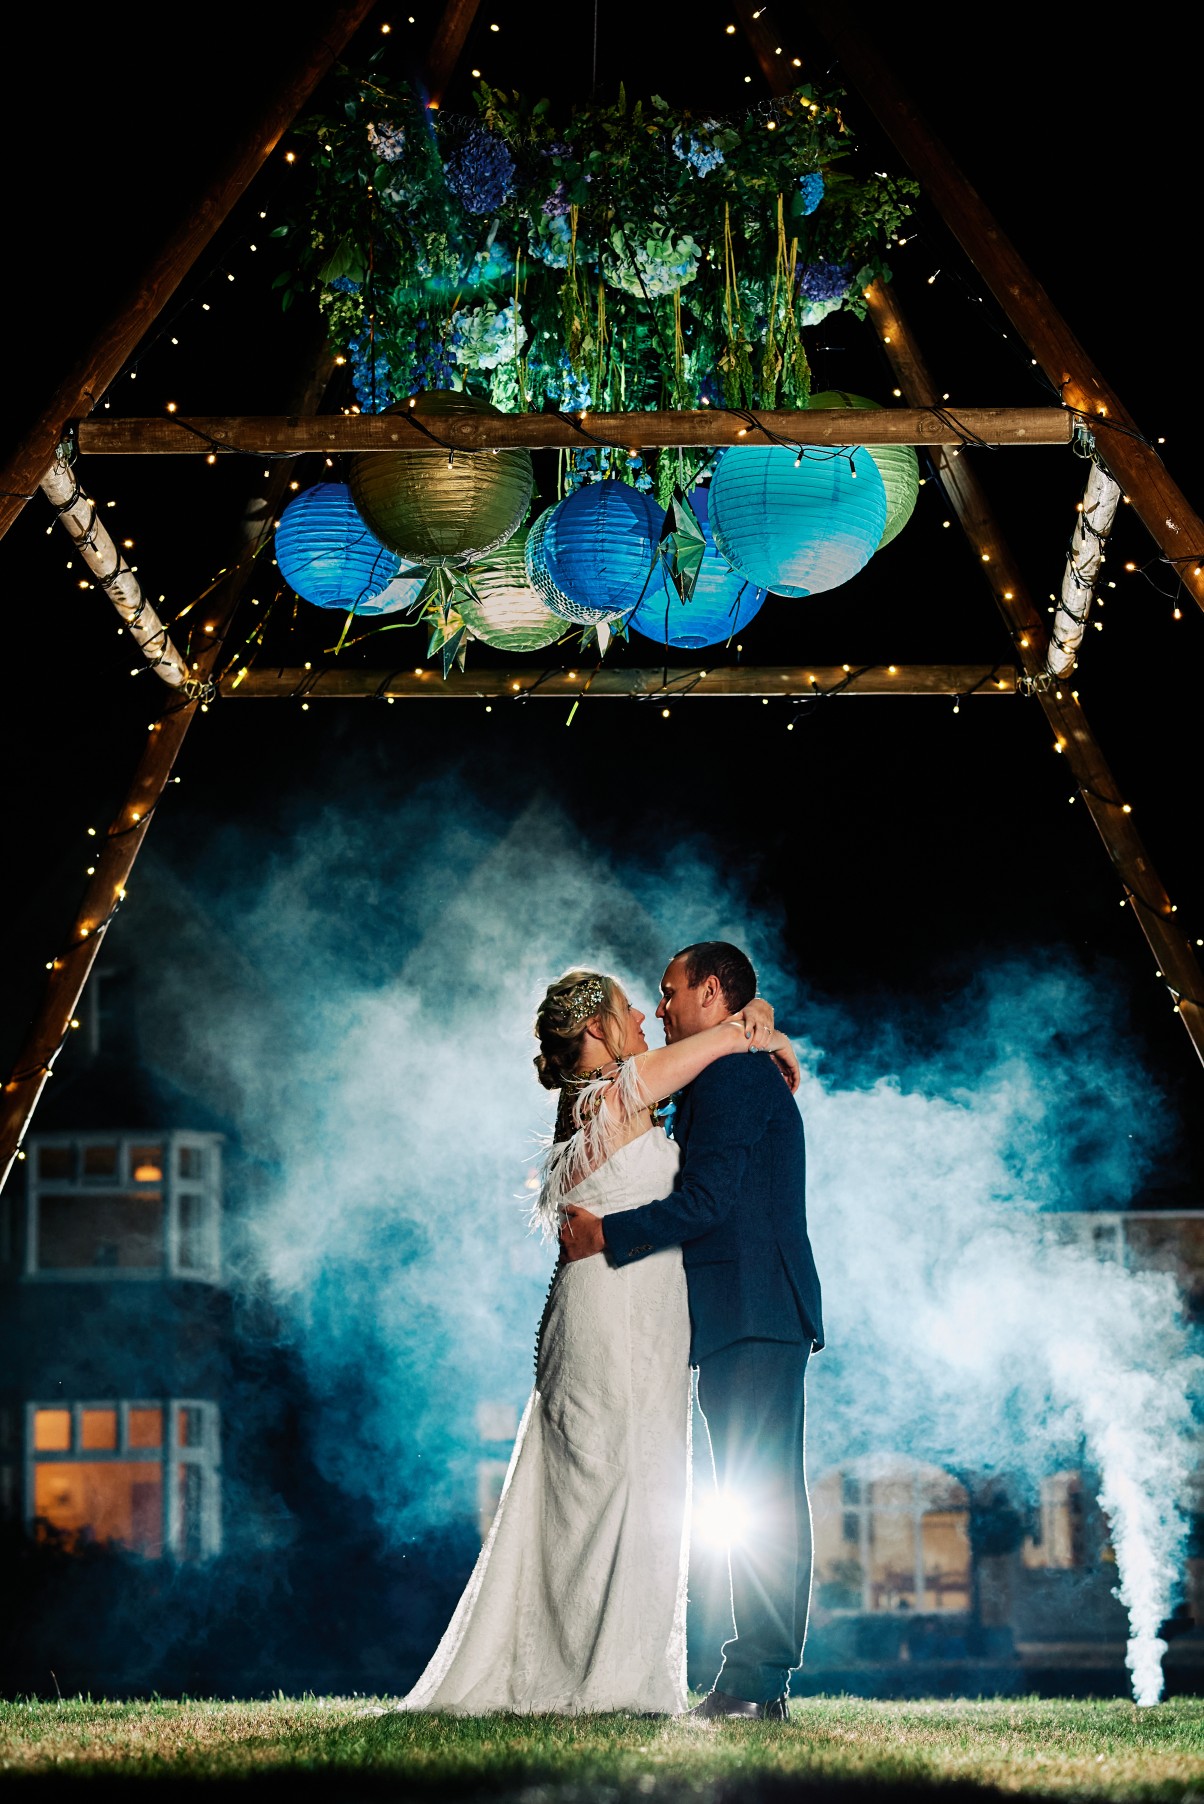 nhs wedding - paramedic wedding - blue and gold wedding - outdoor wedding - micro wedding - surprise wedding - wedding smoke bomb